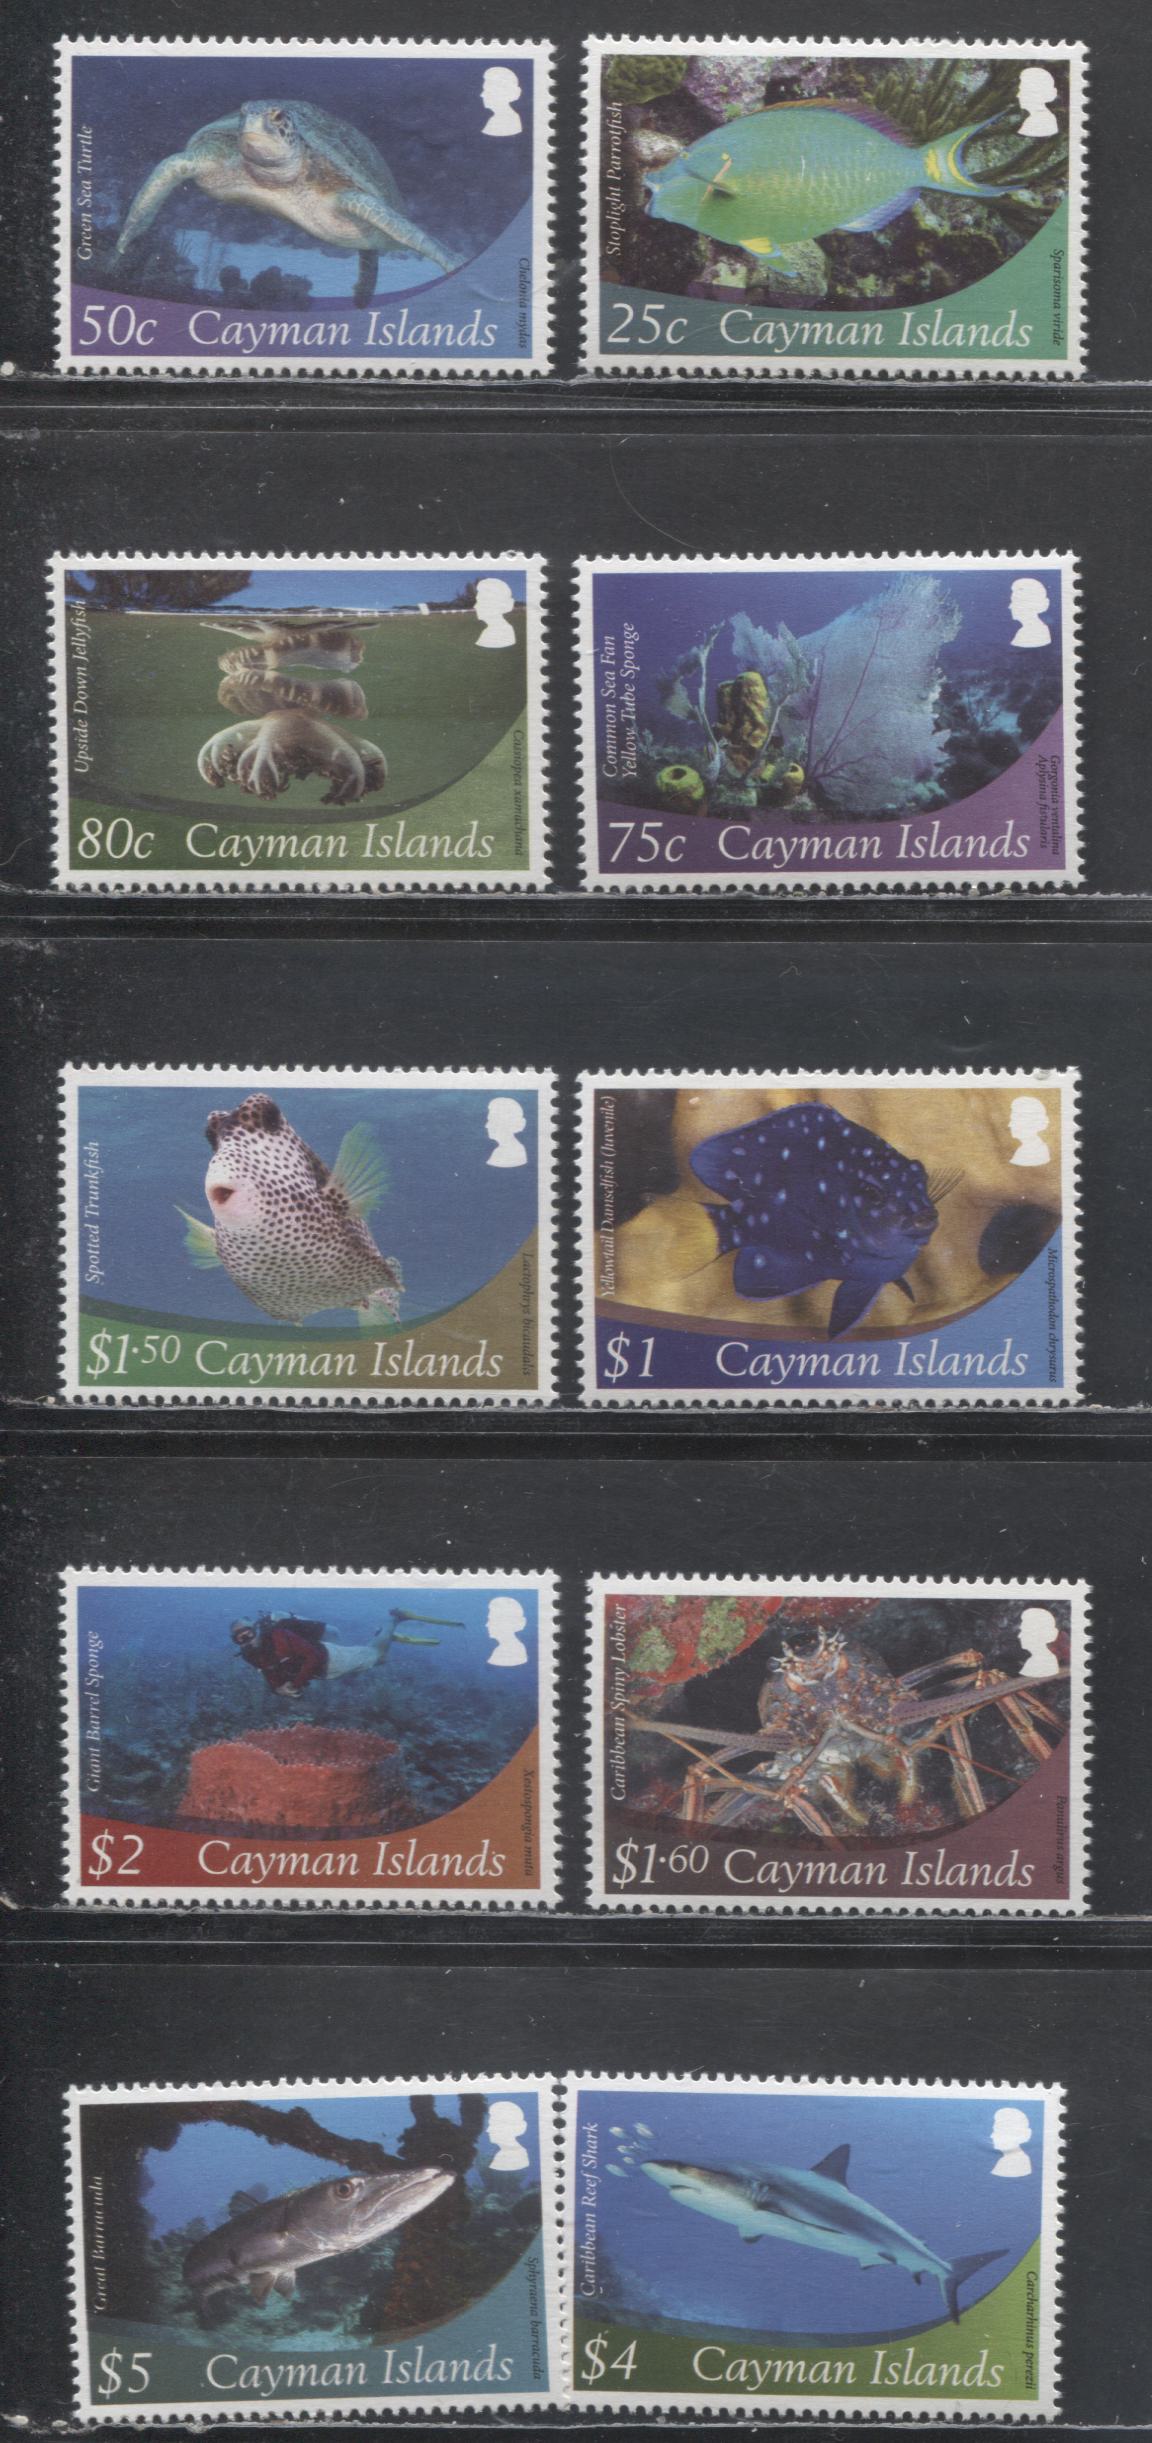 Lot 156 Cayman Islands SC#1106-1115 2012 Marine Life Issue, 10 VFNH Singles, 2017 Scott Cat. $43.25